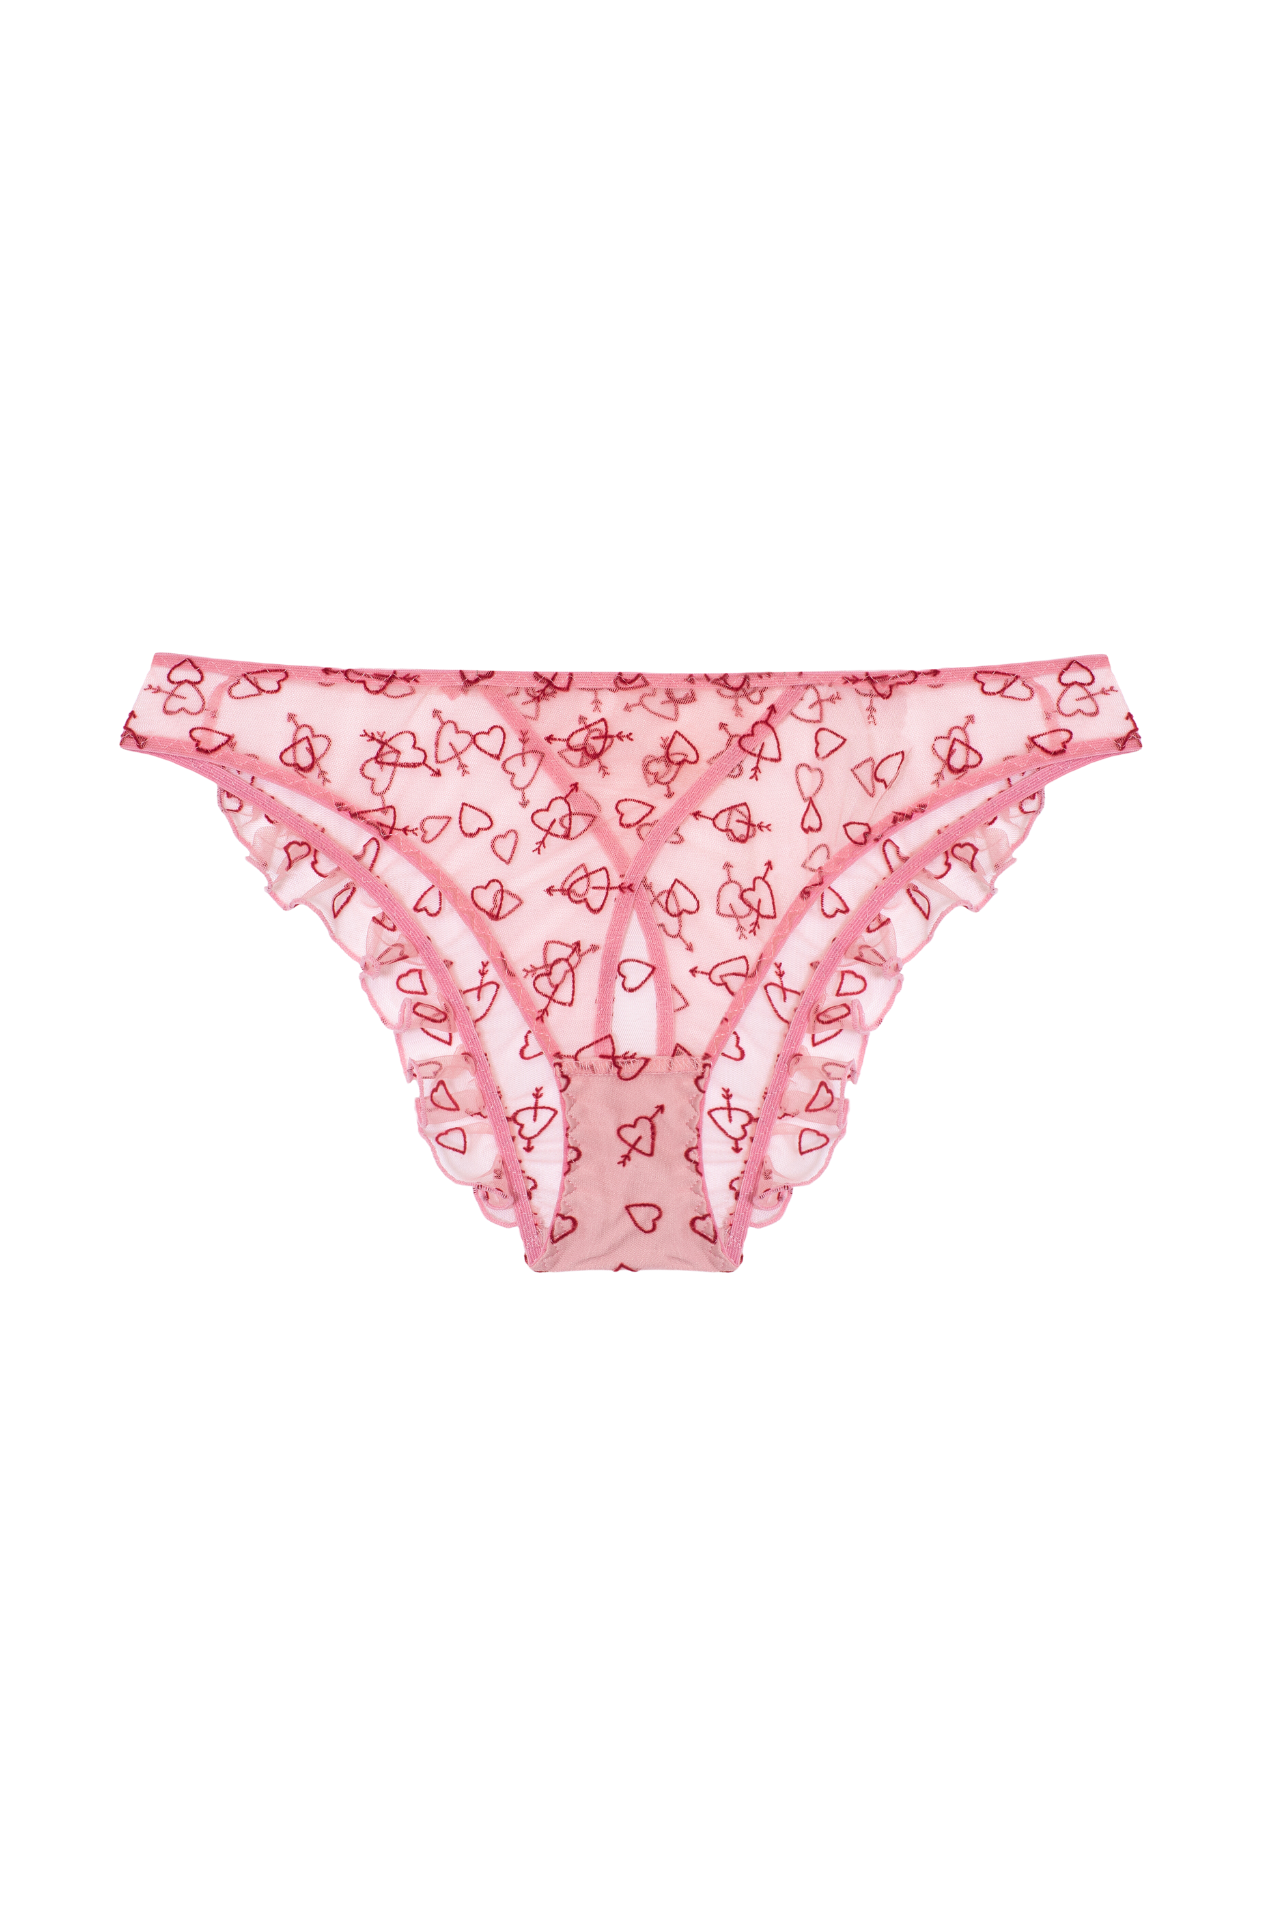 Rose ruffled romantic bouquet Brazilian panty, Le Petit Trou, Shop  Brazilian Panties Online